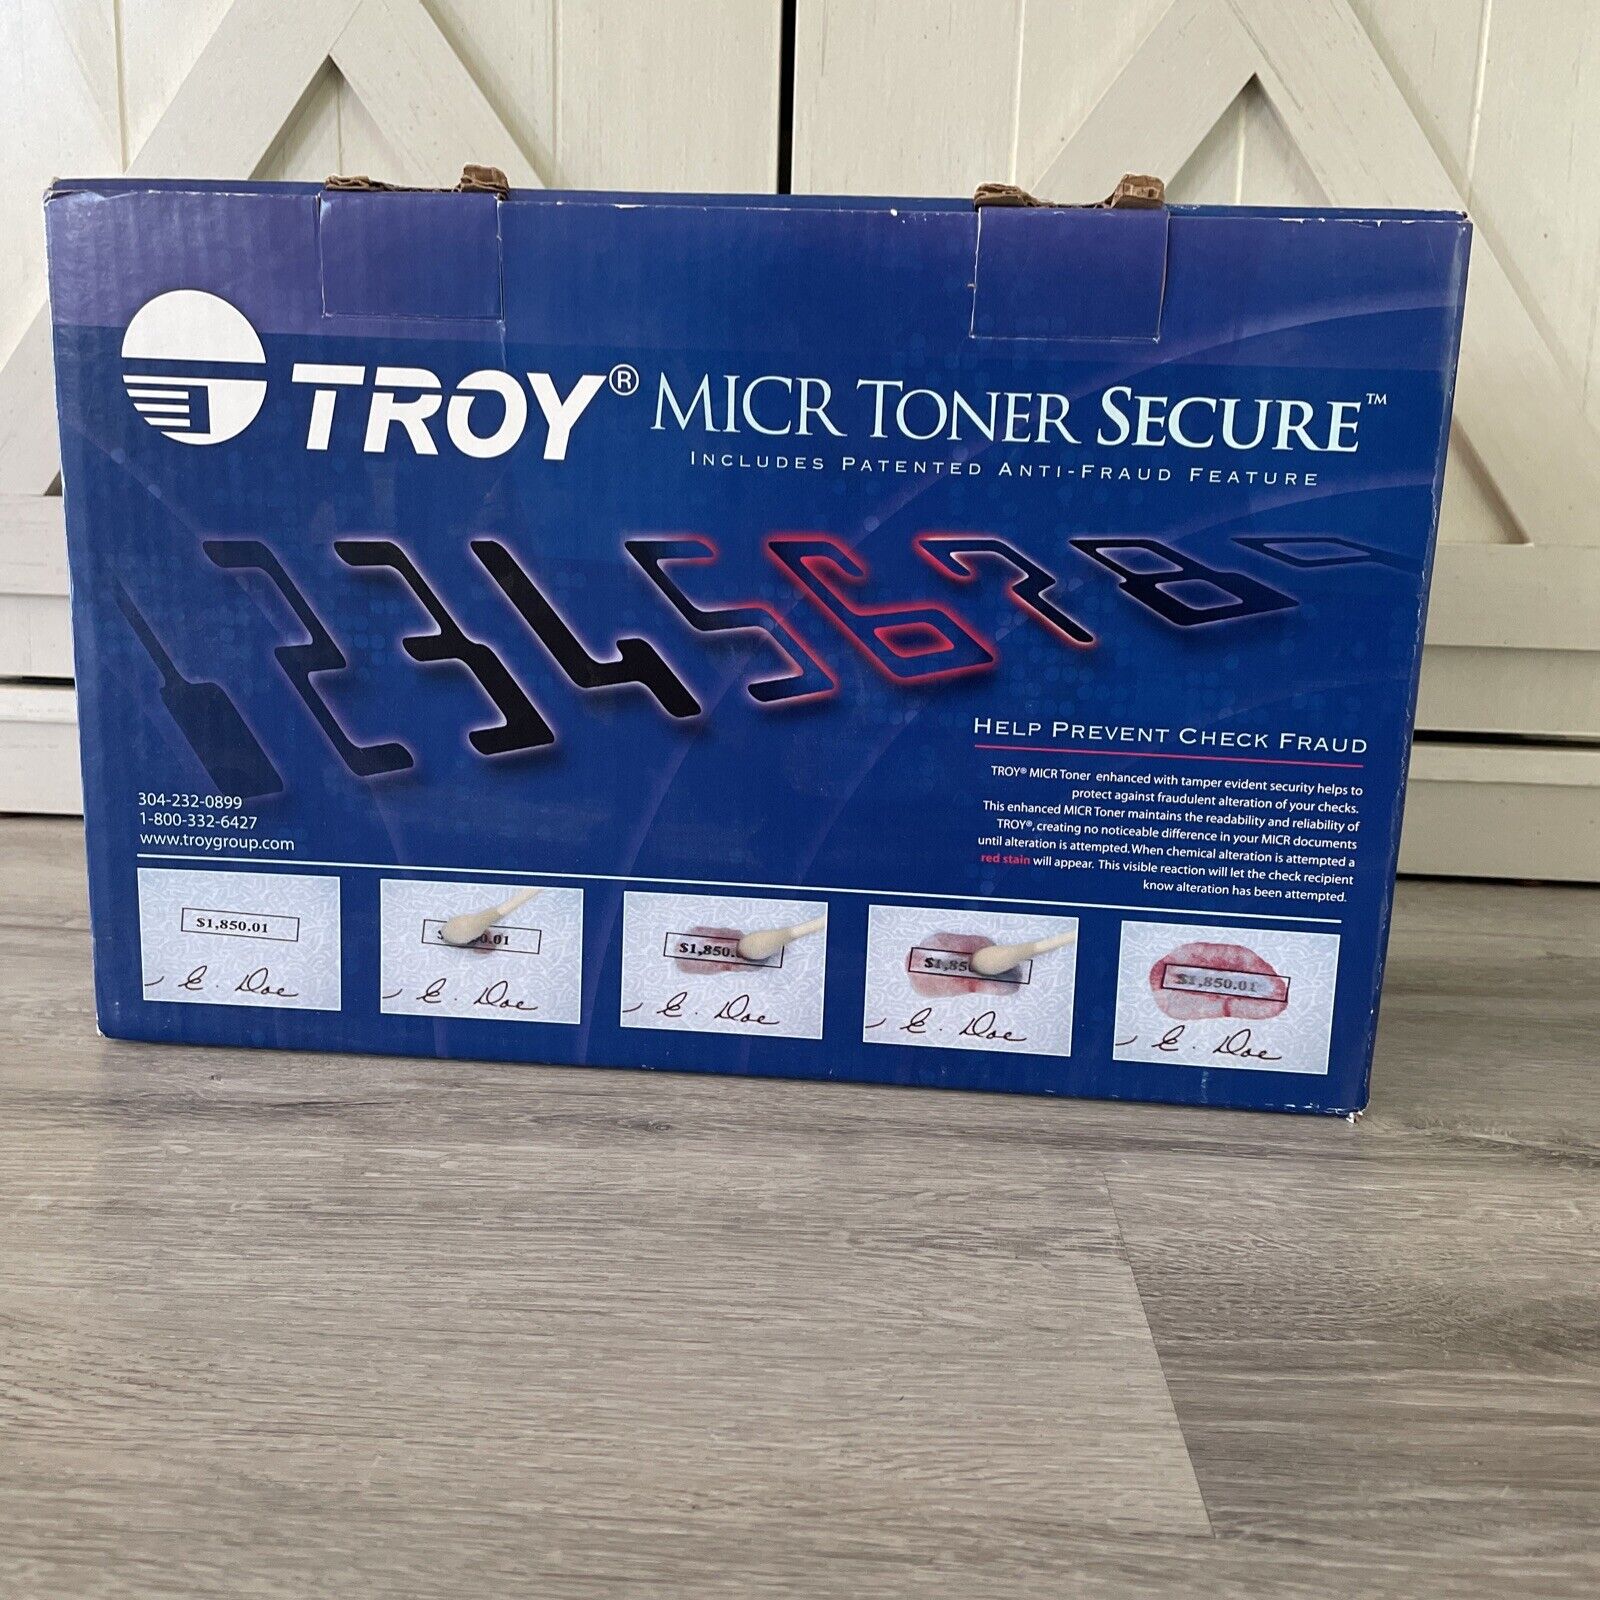 Troy (02-81078-001) MICR Black Toner Printer Cartridge for HP 4100 Printers